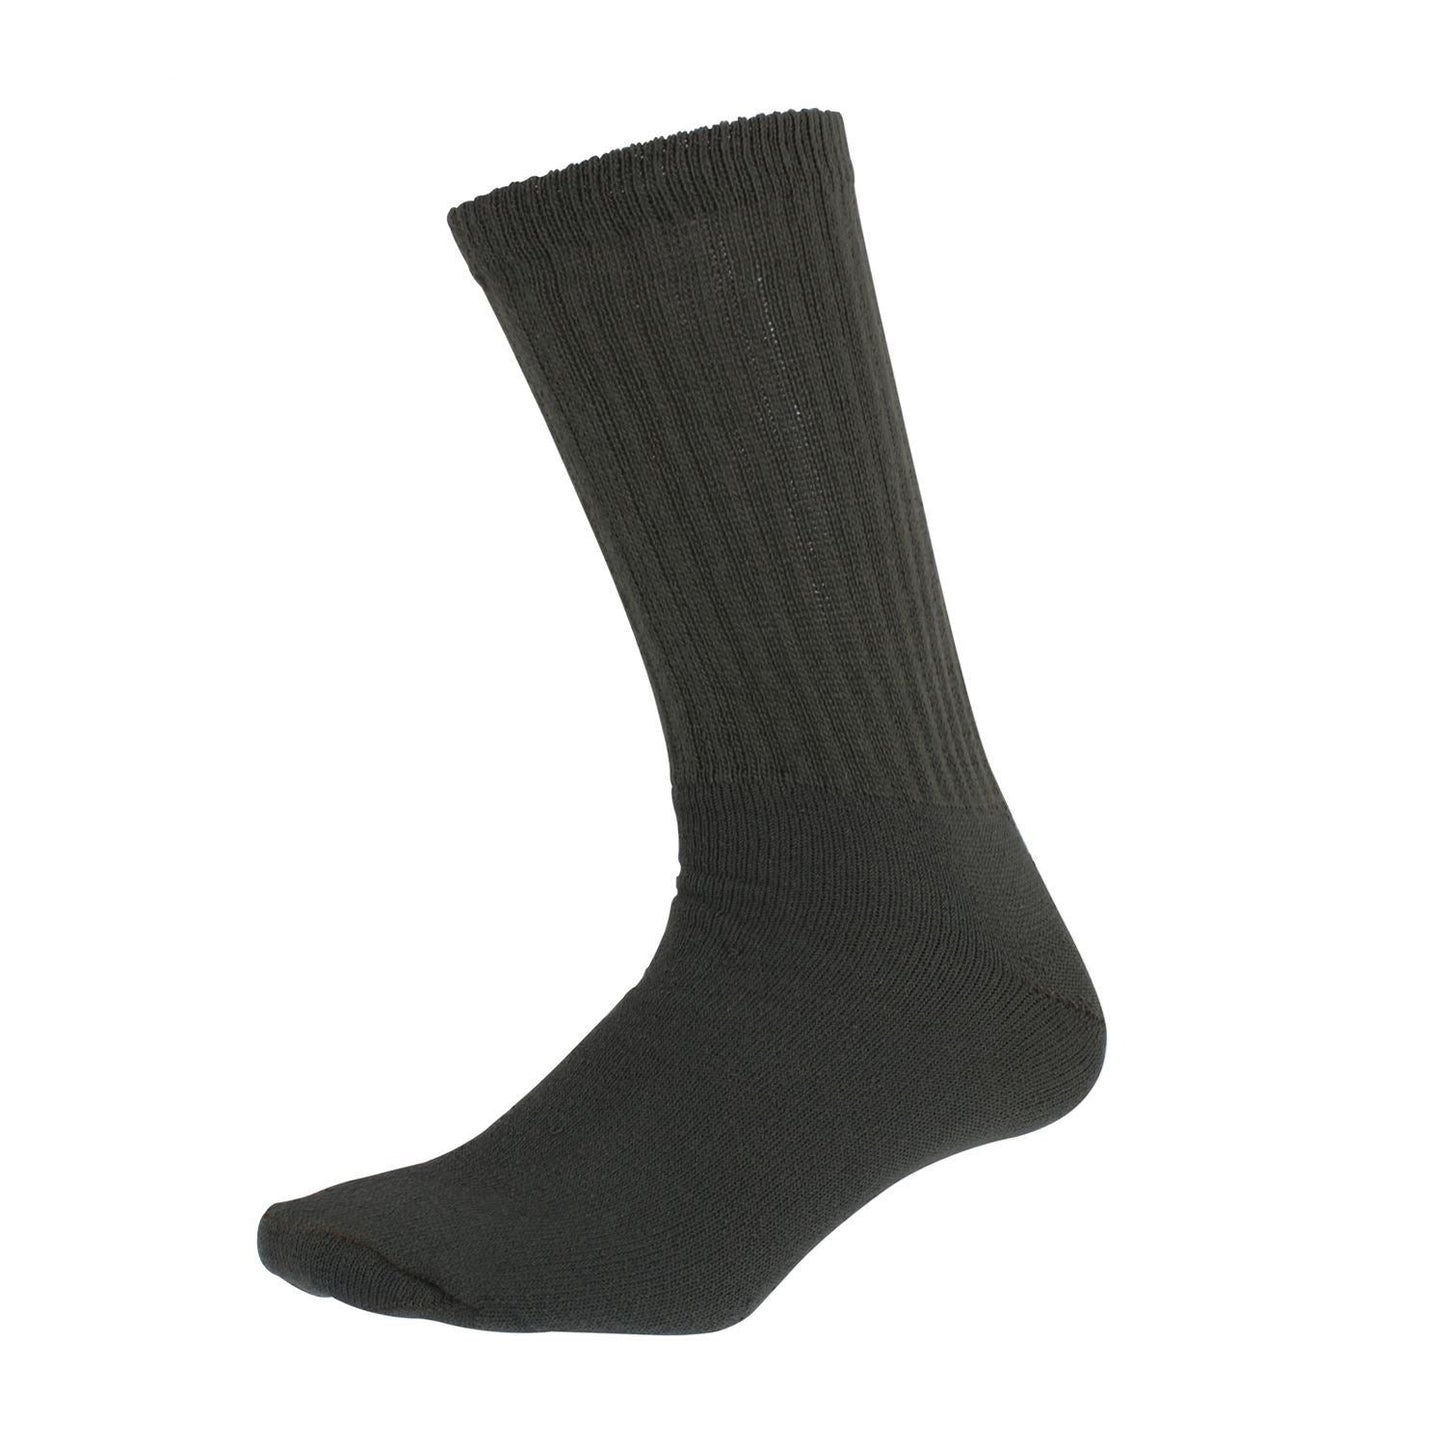 Athletic Crew Socks Color : Olive Drab, Size : L (10 per pack)